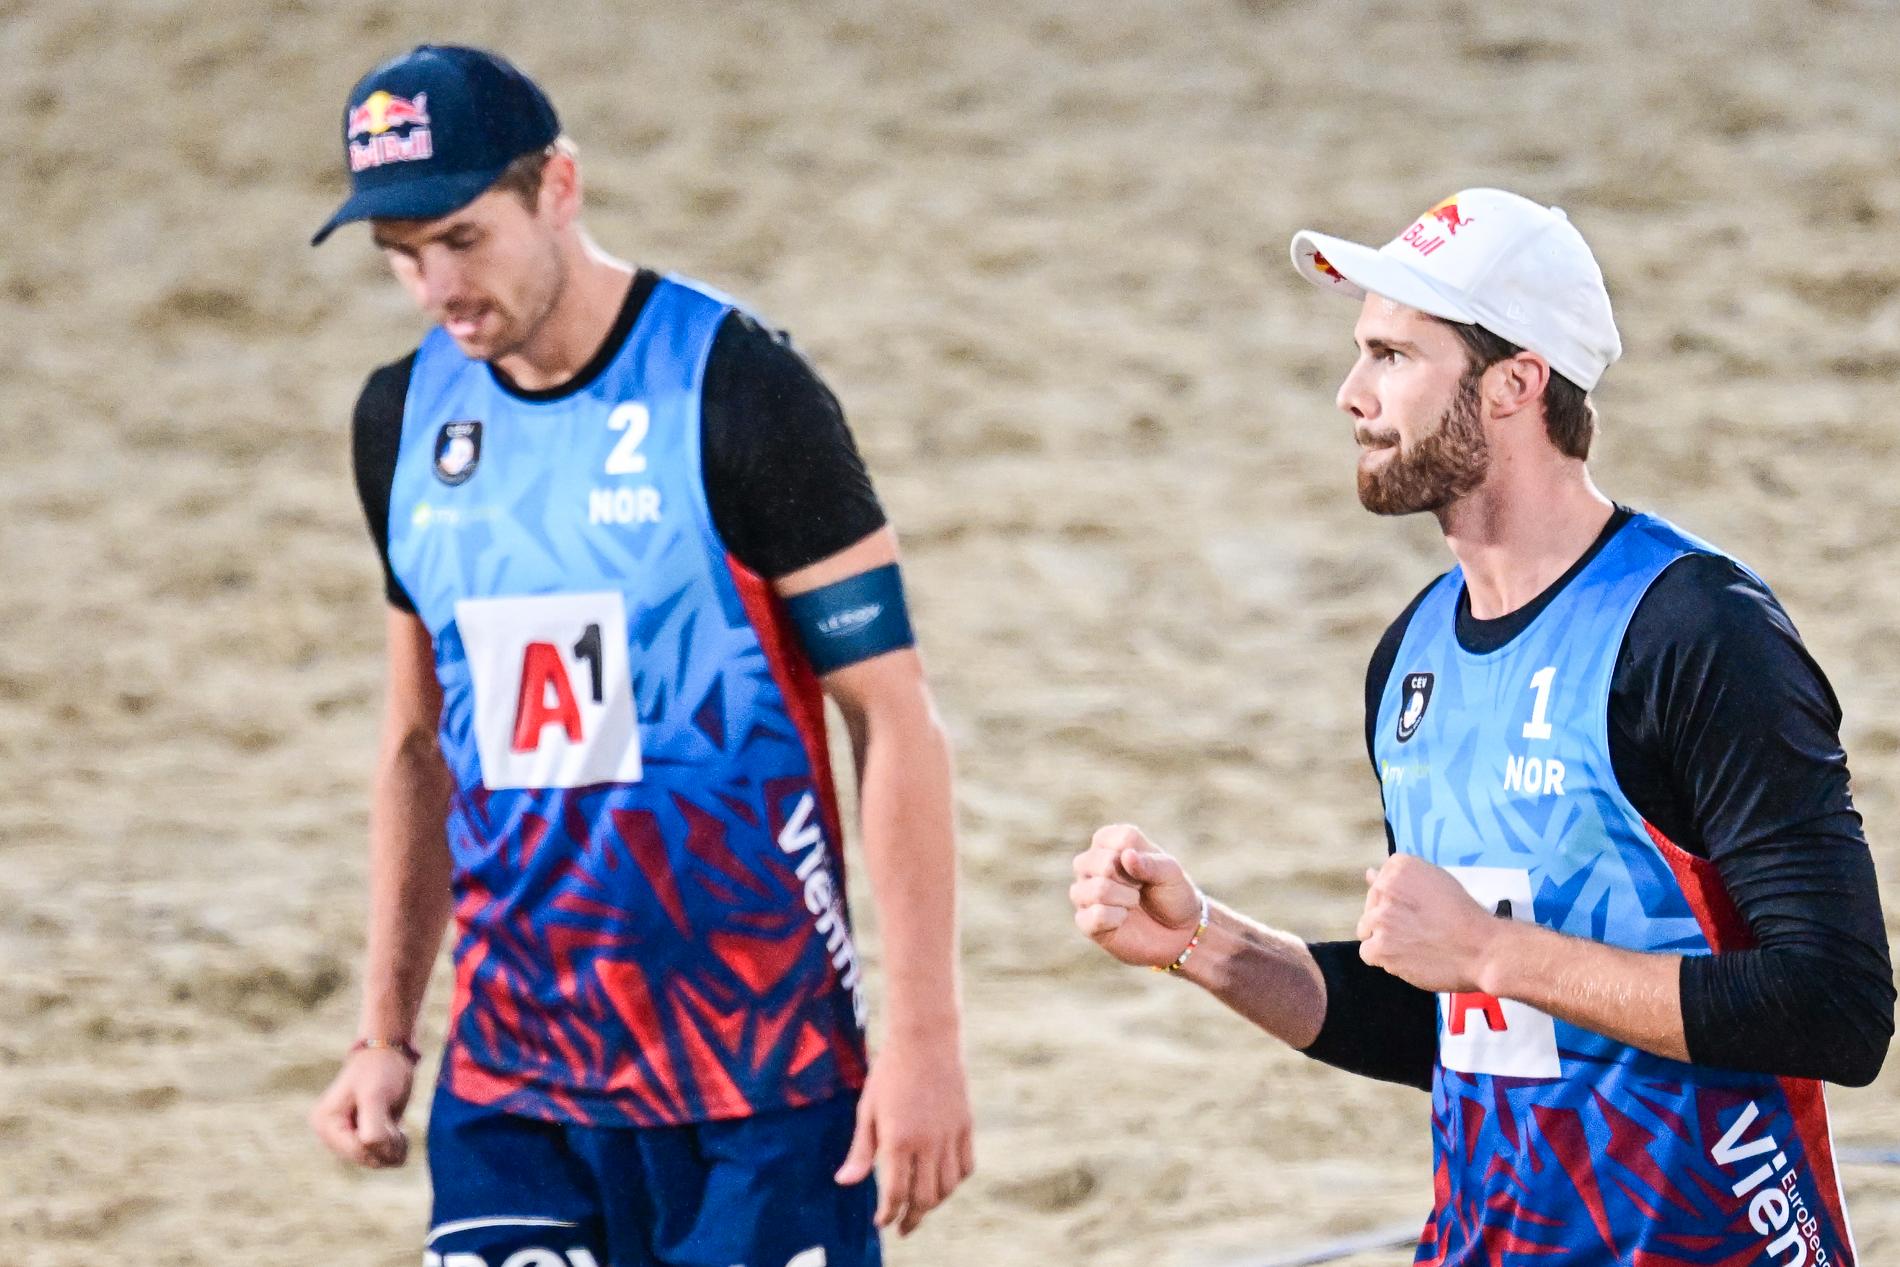 Beachvolleybal: Christian Sorum en Anders Mol trekken zich terug uit het EK 2023-toernooi